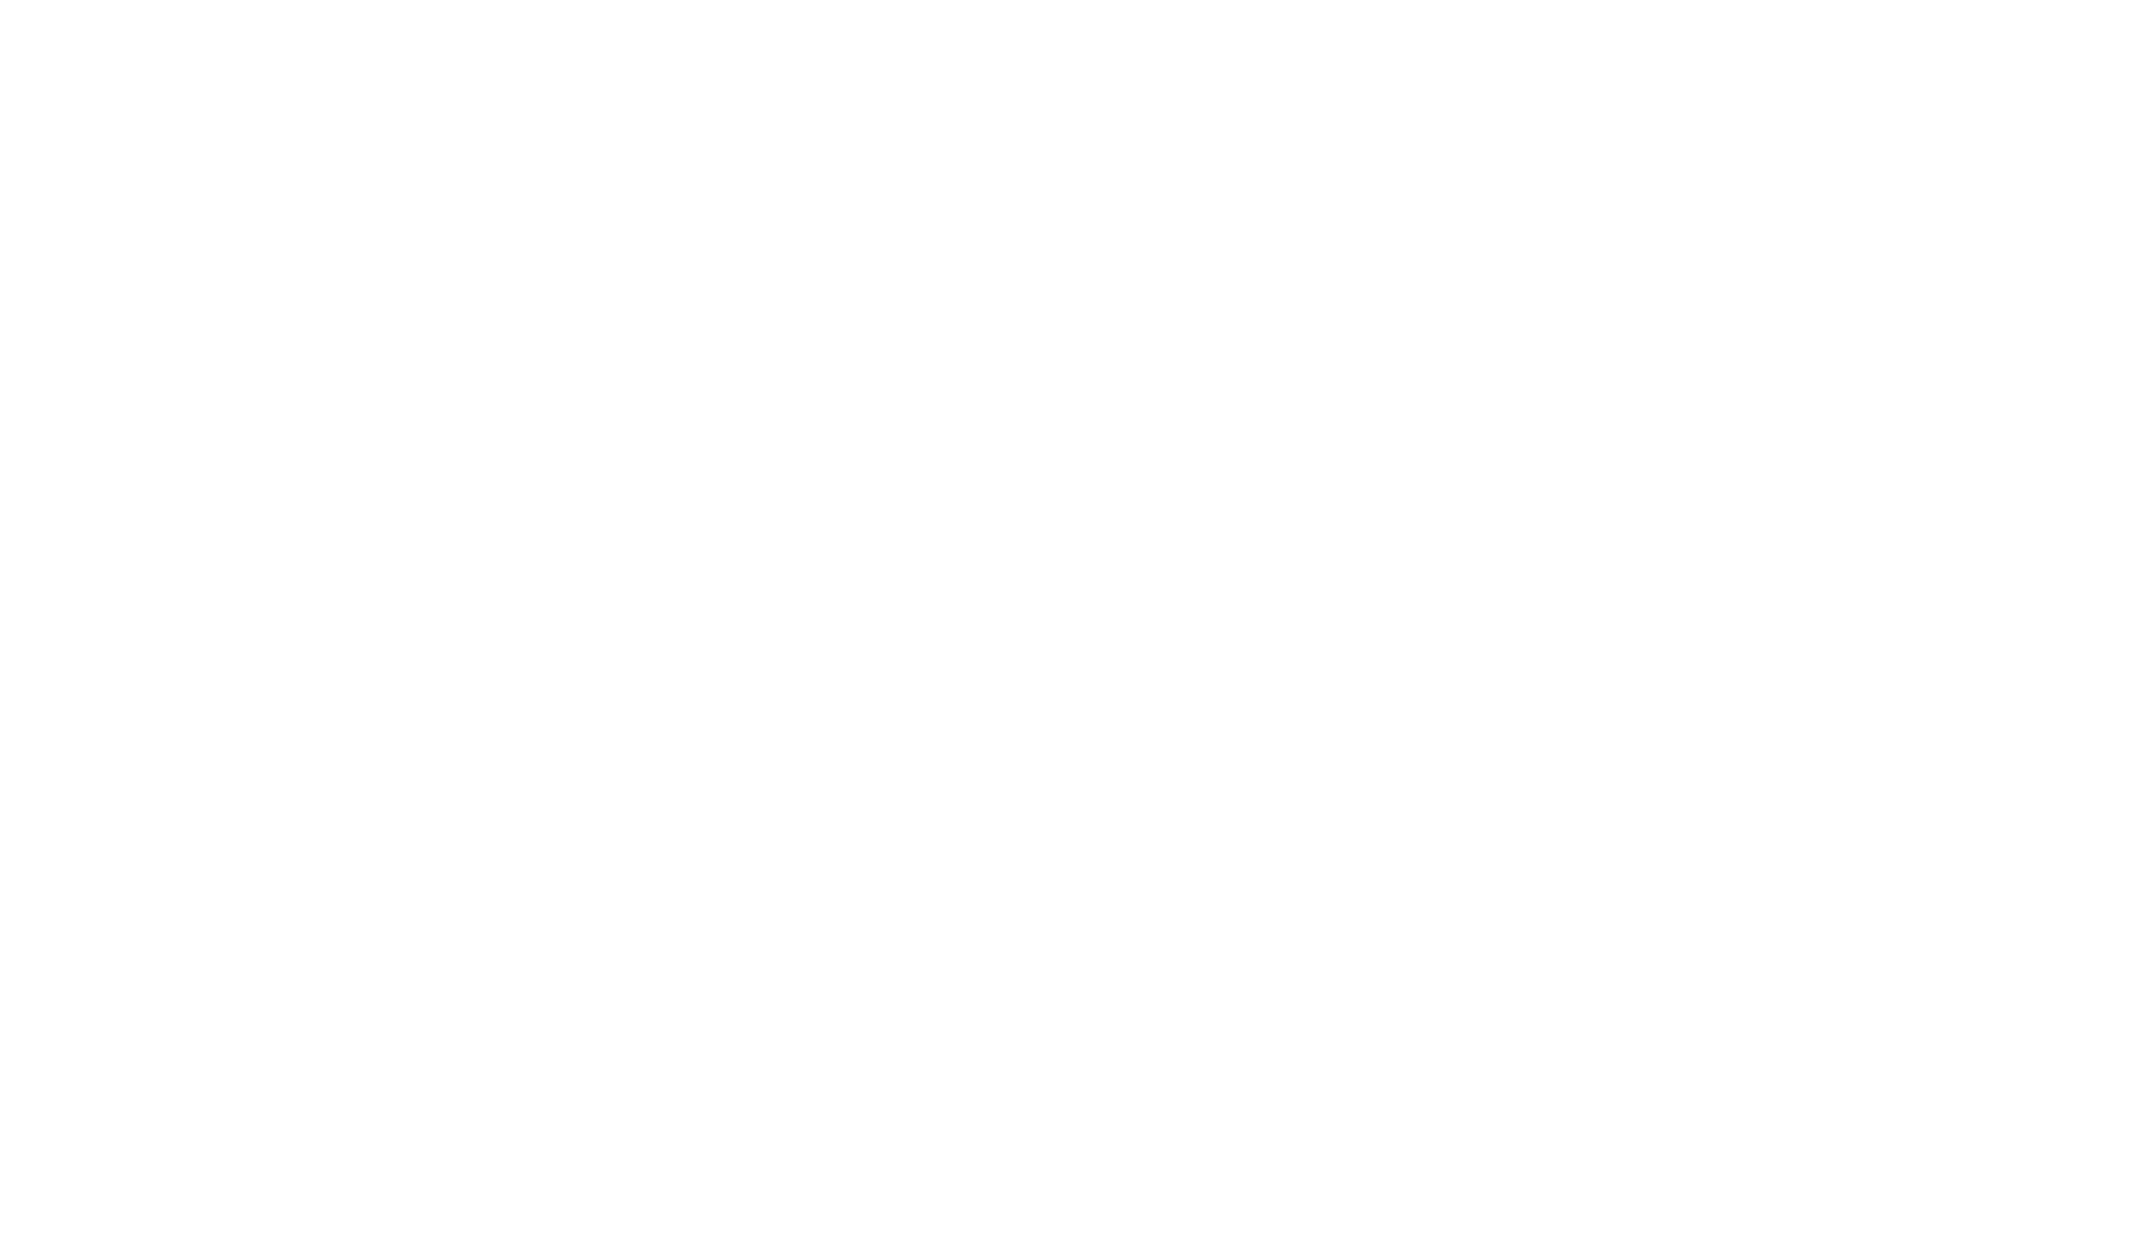 Celebrating 10 Next Century Cities
2014 | 2024